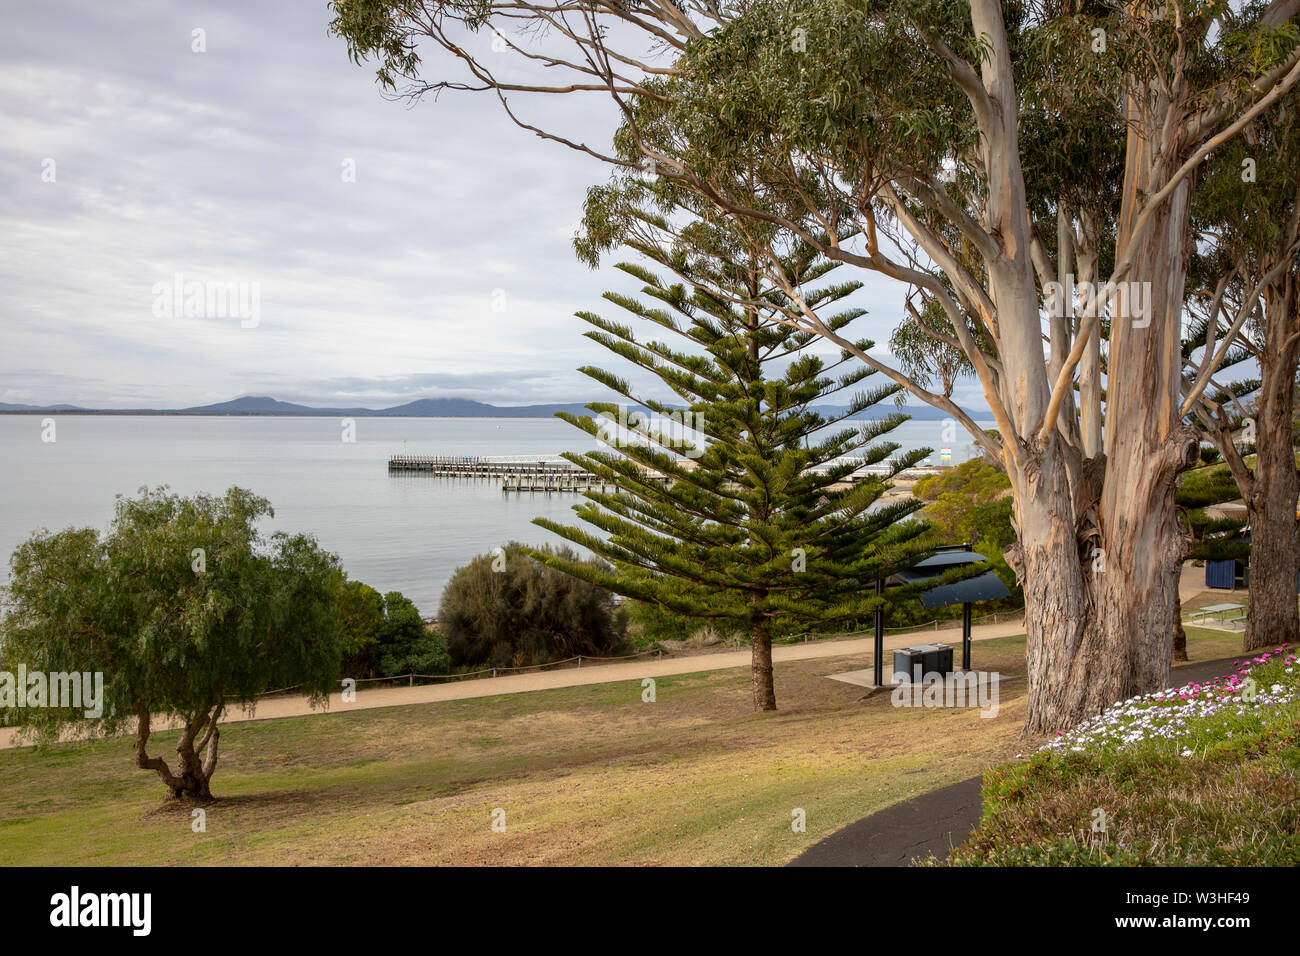 Town of Swansea on the east coast of Tasmania and view of Great Oyster Bay,Tasmania,Australlia Stock Photo